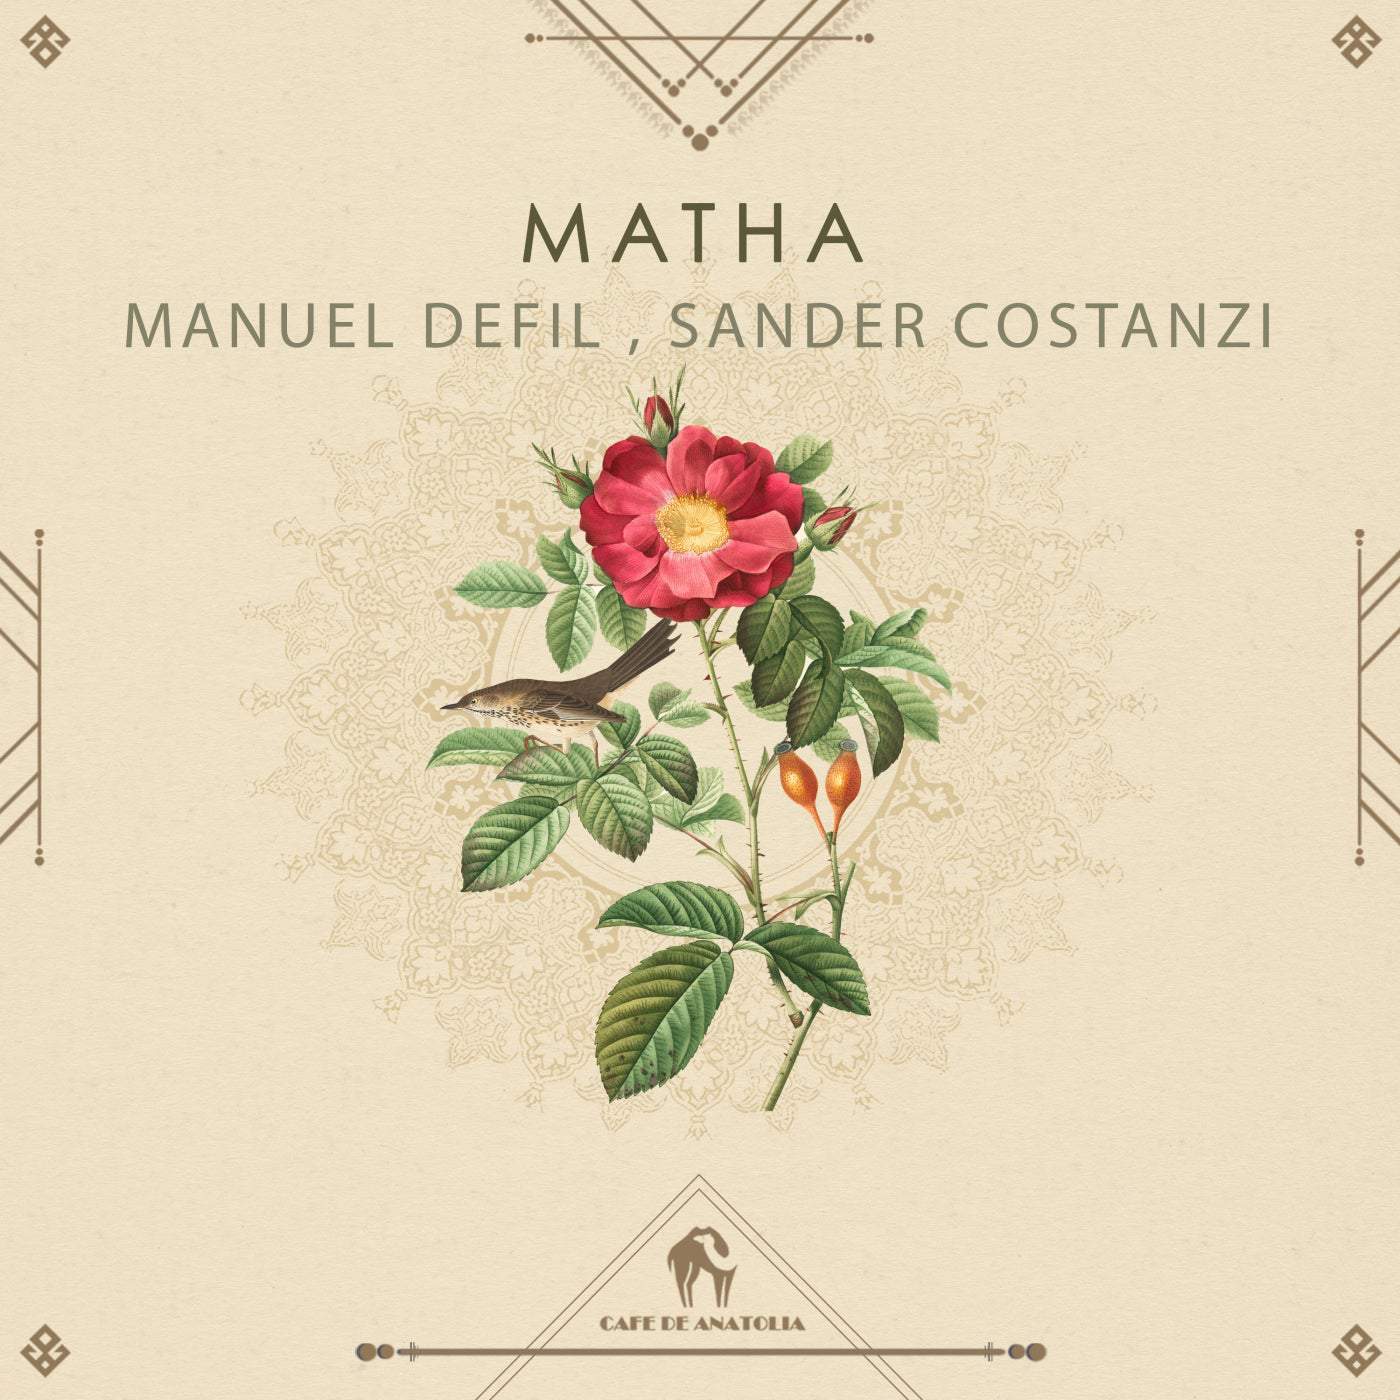 image cover: Sander Costanzi, Manuel Defil, Cafe De Anatolia - Matha / CDA166